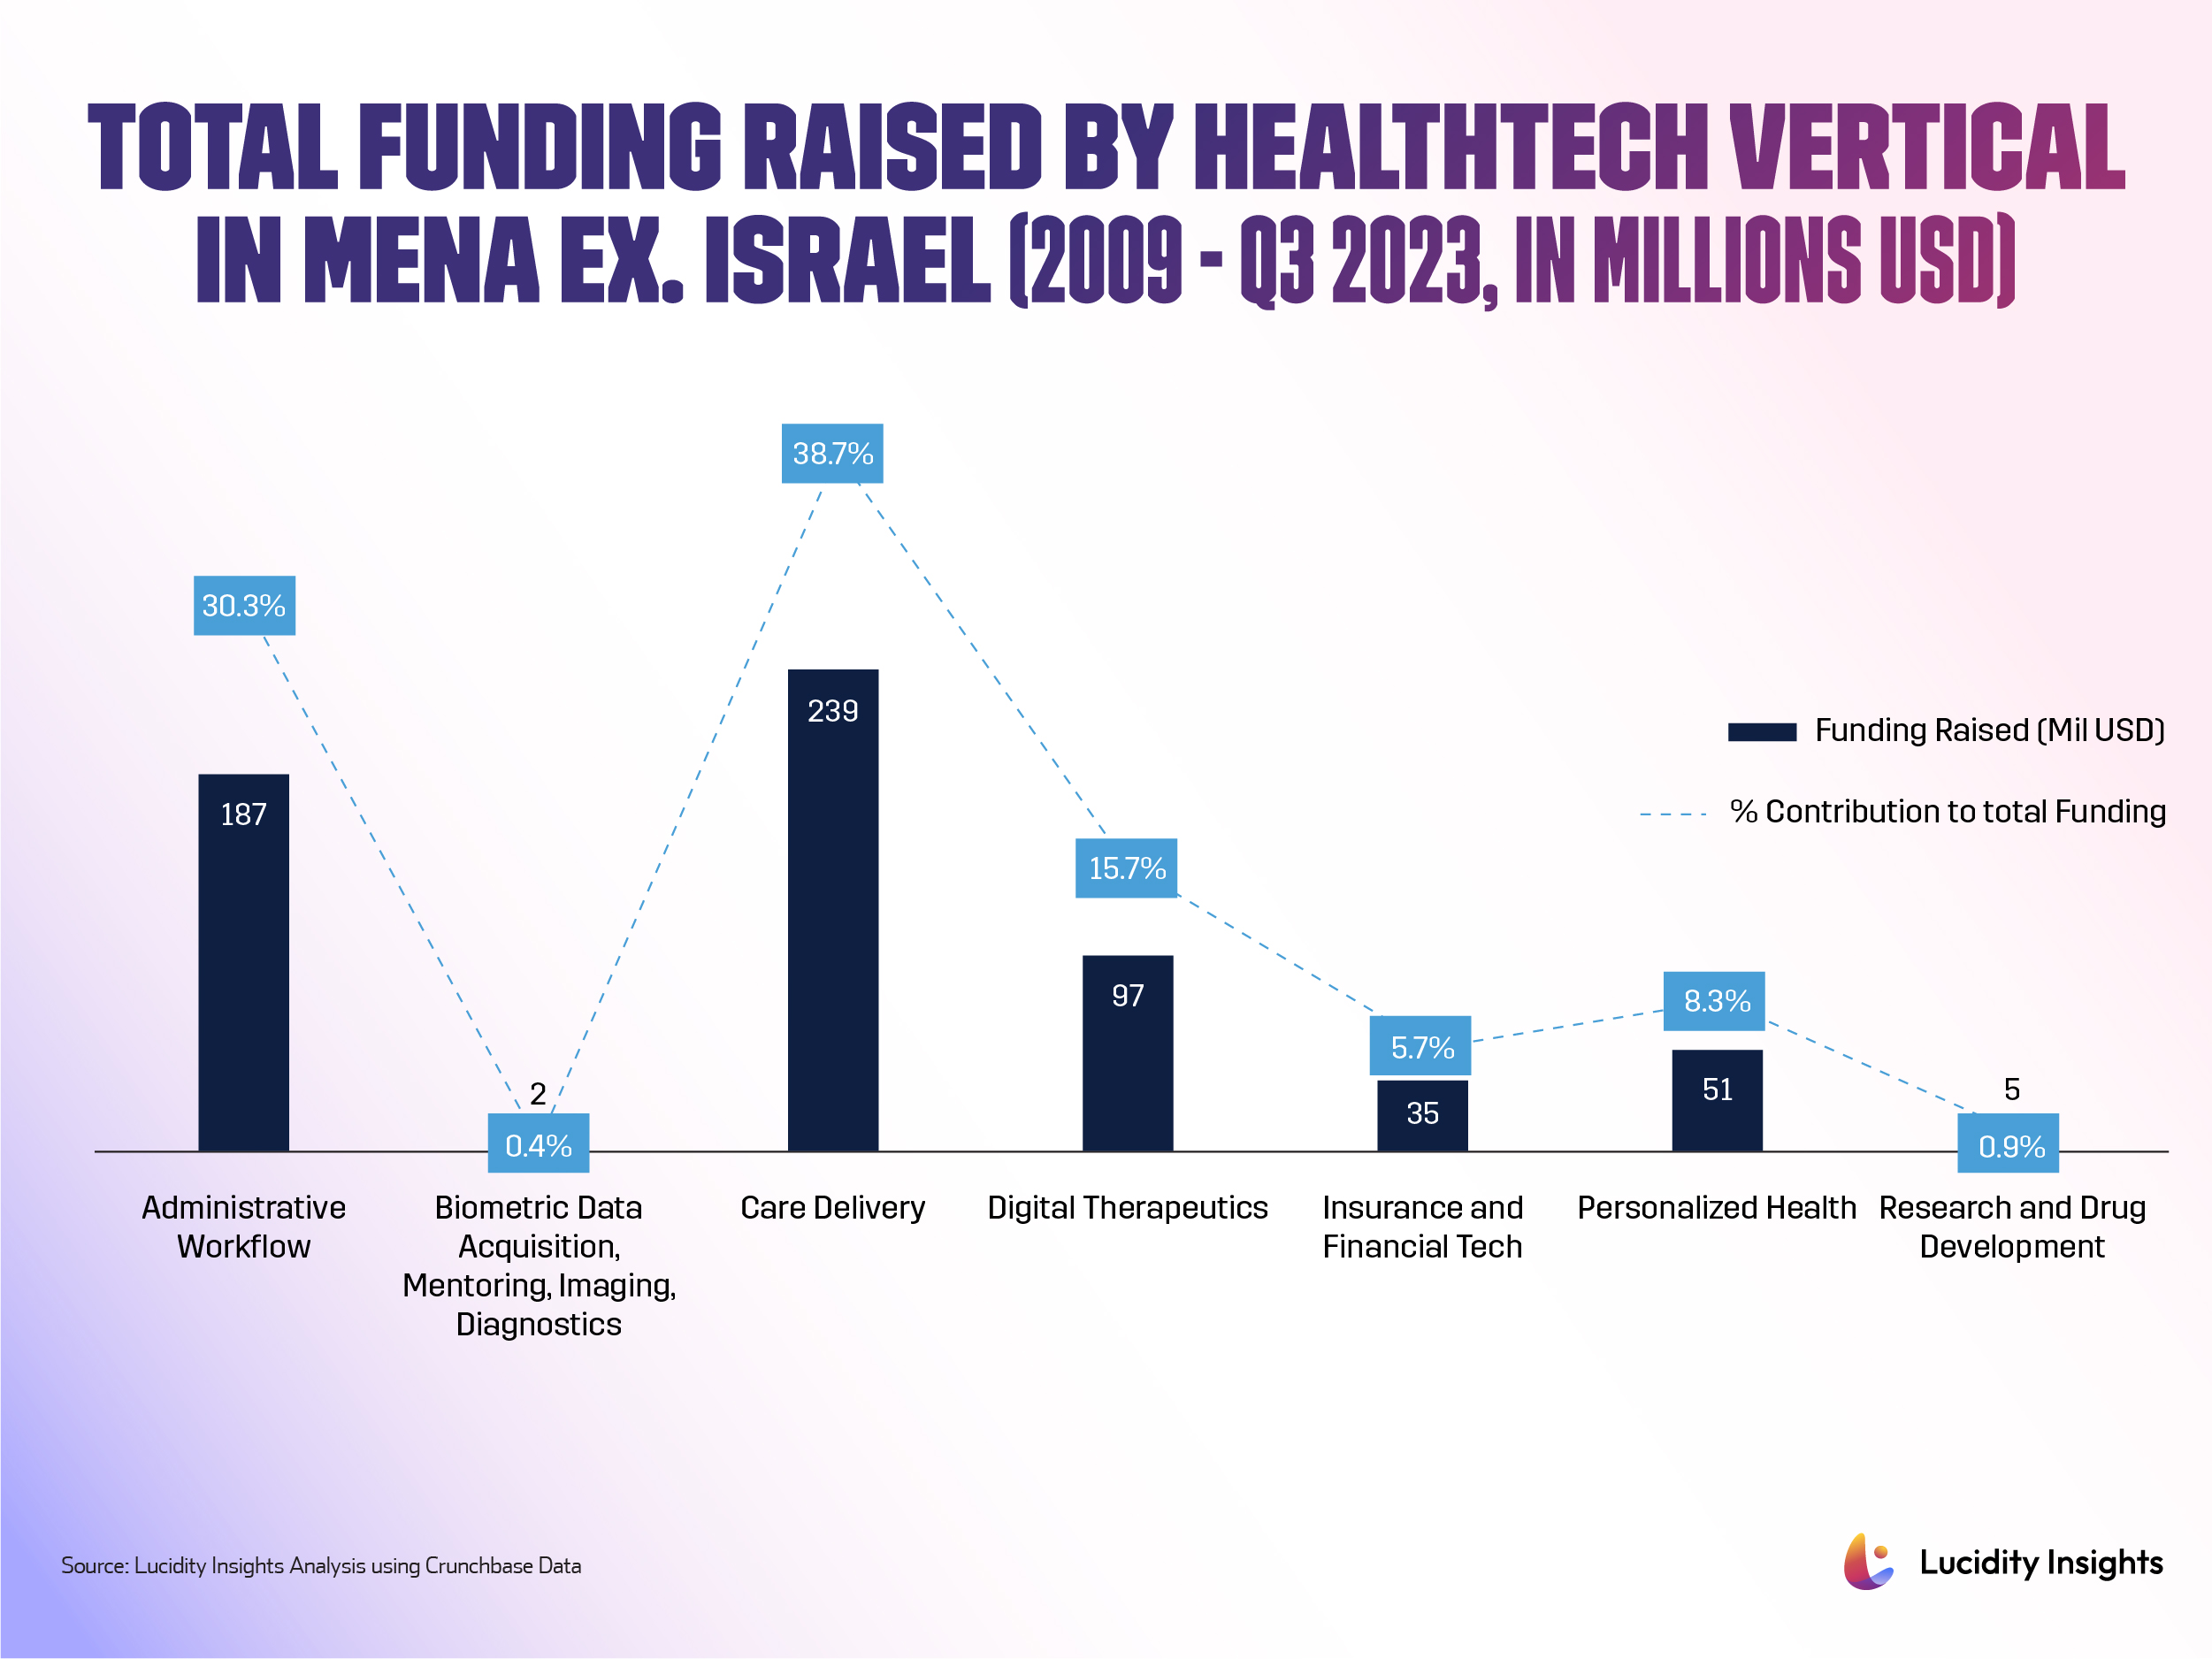 Total Funding Raised by Healthtech Vertical in MENA (Excluding Israel)